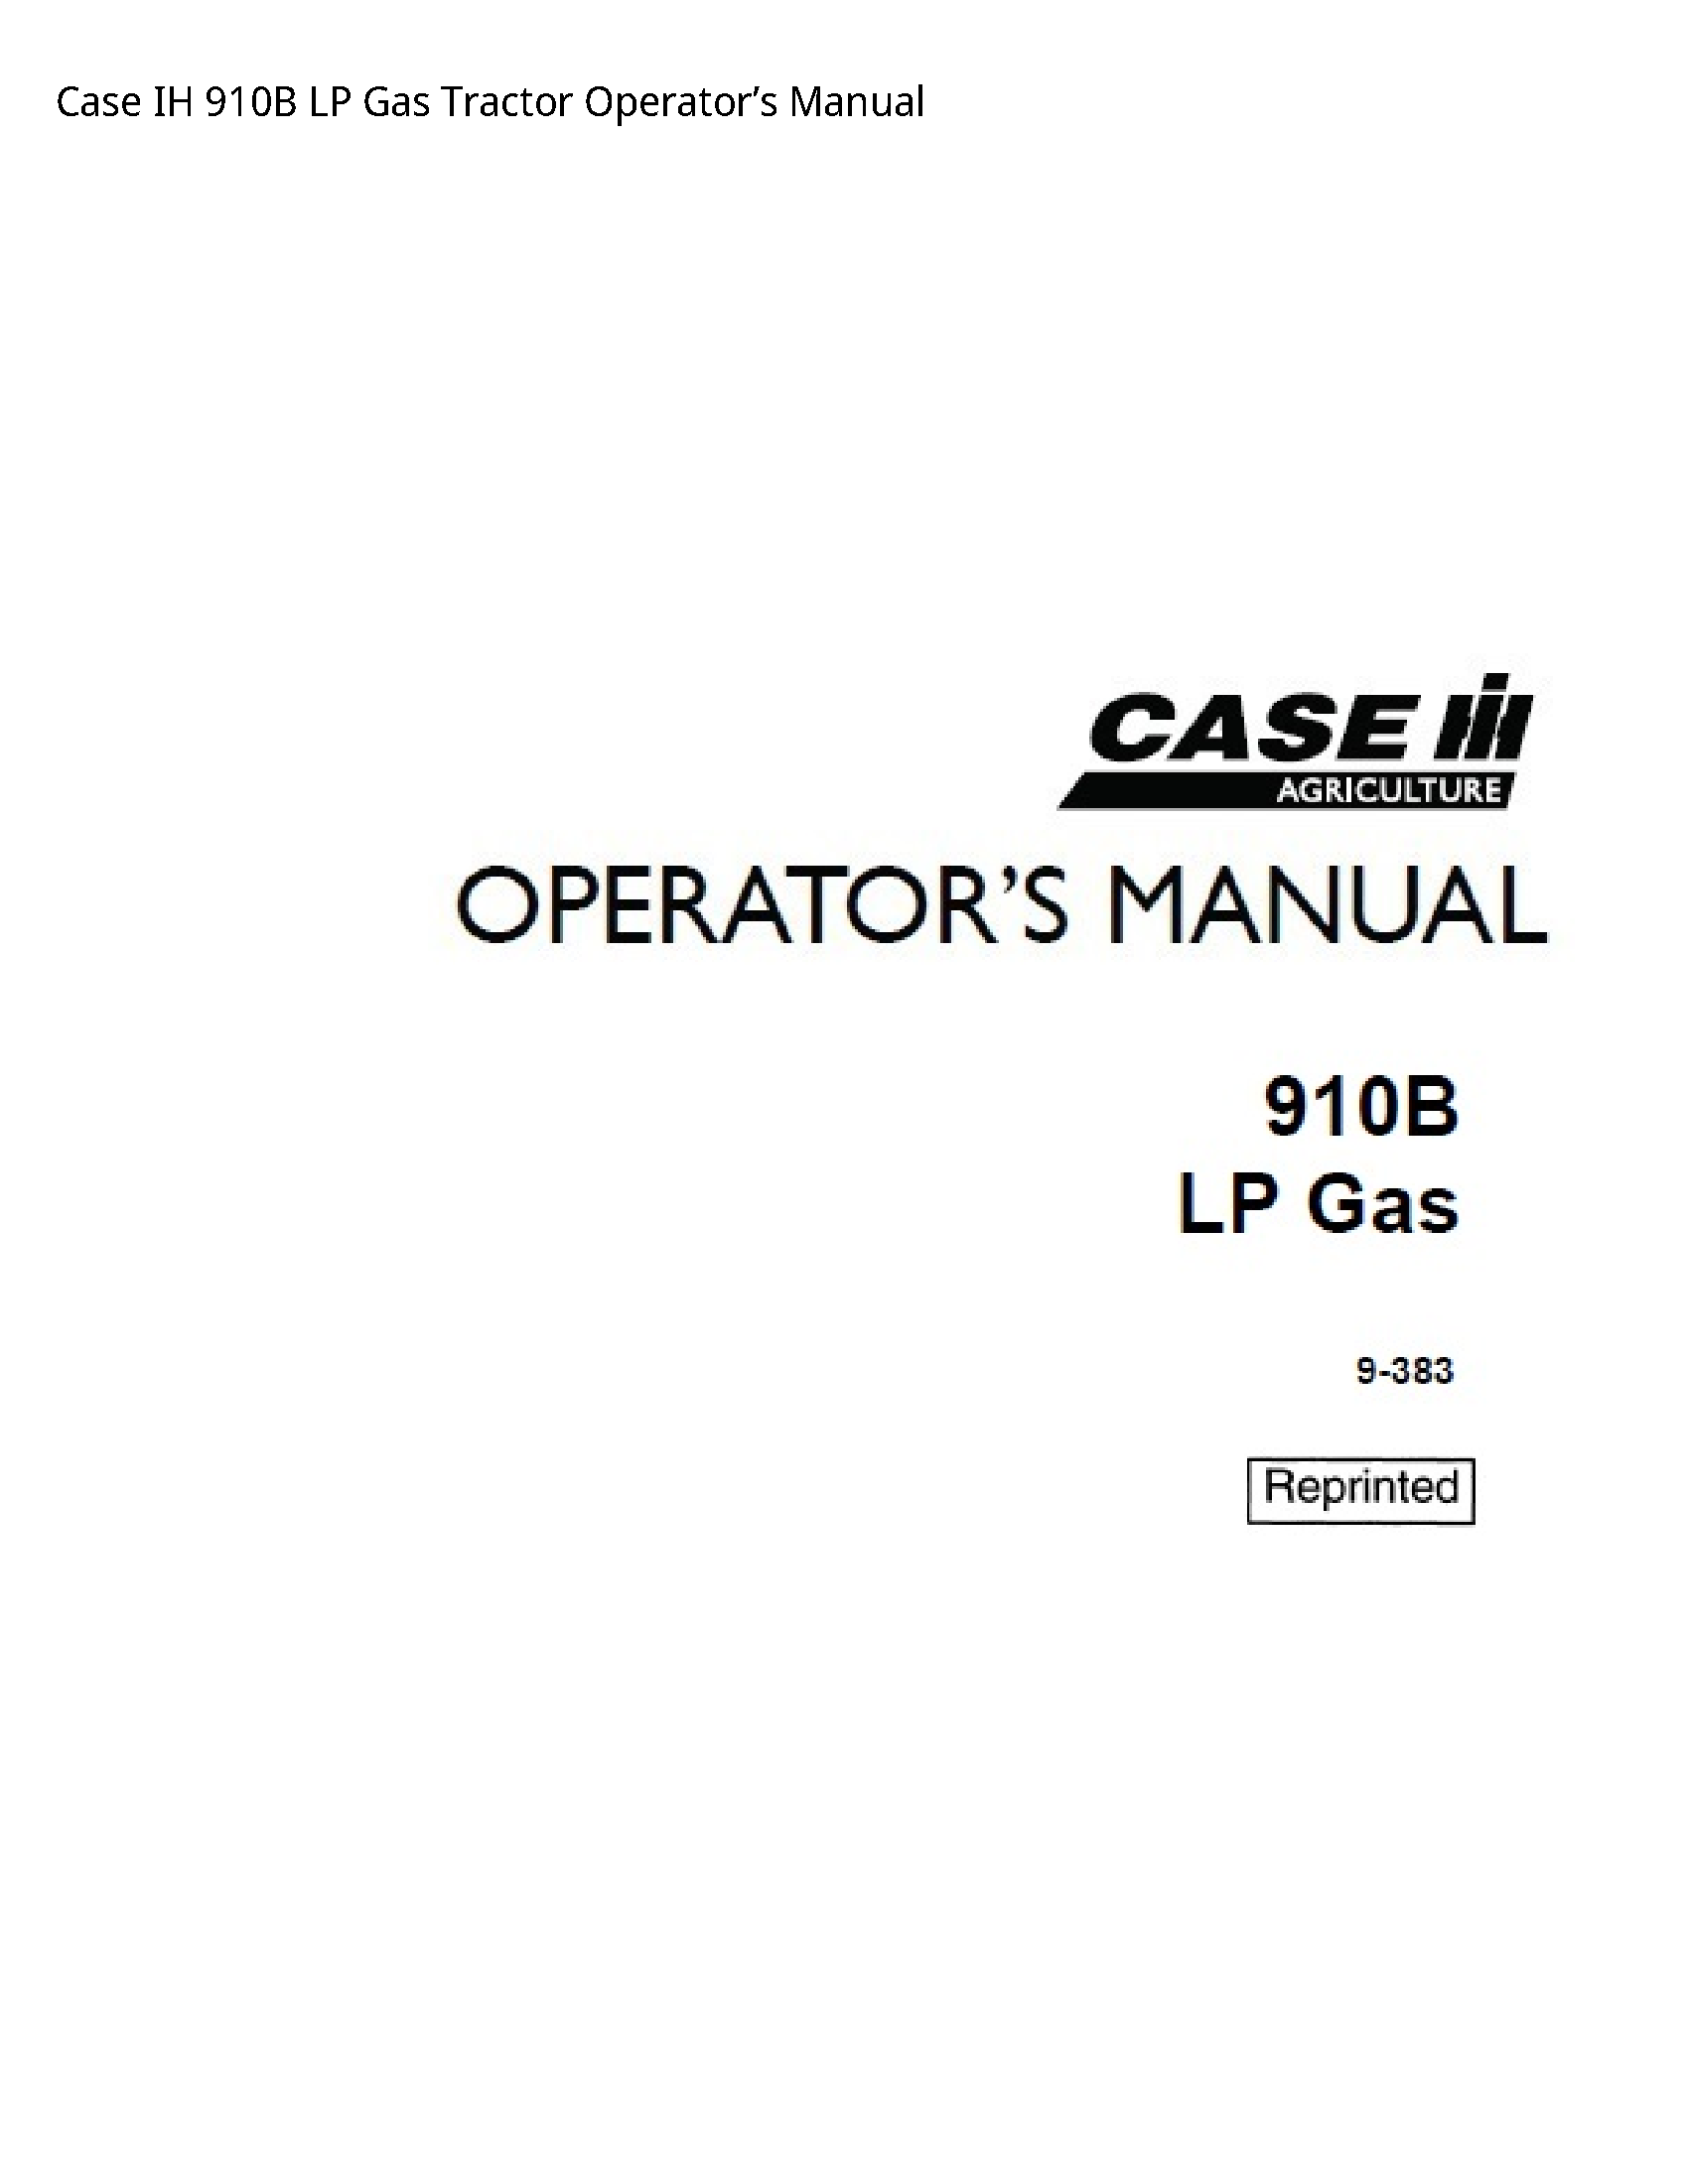 Case/Case IH 910B IH LP Gas Tractor Operator’s manual